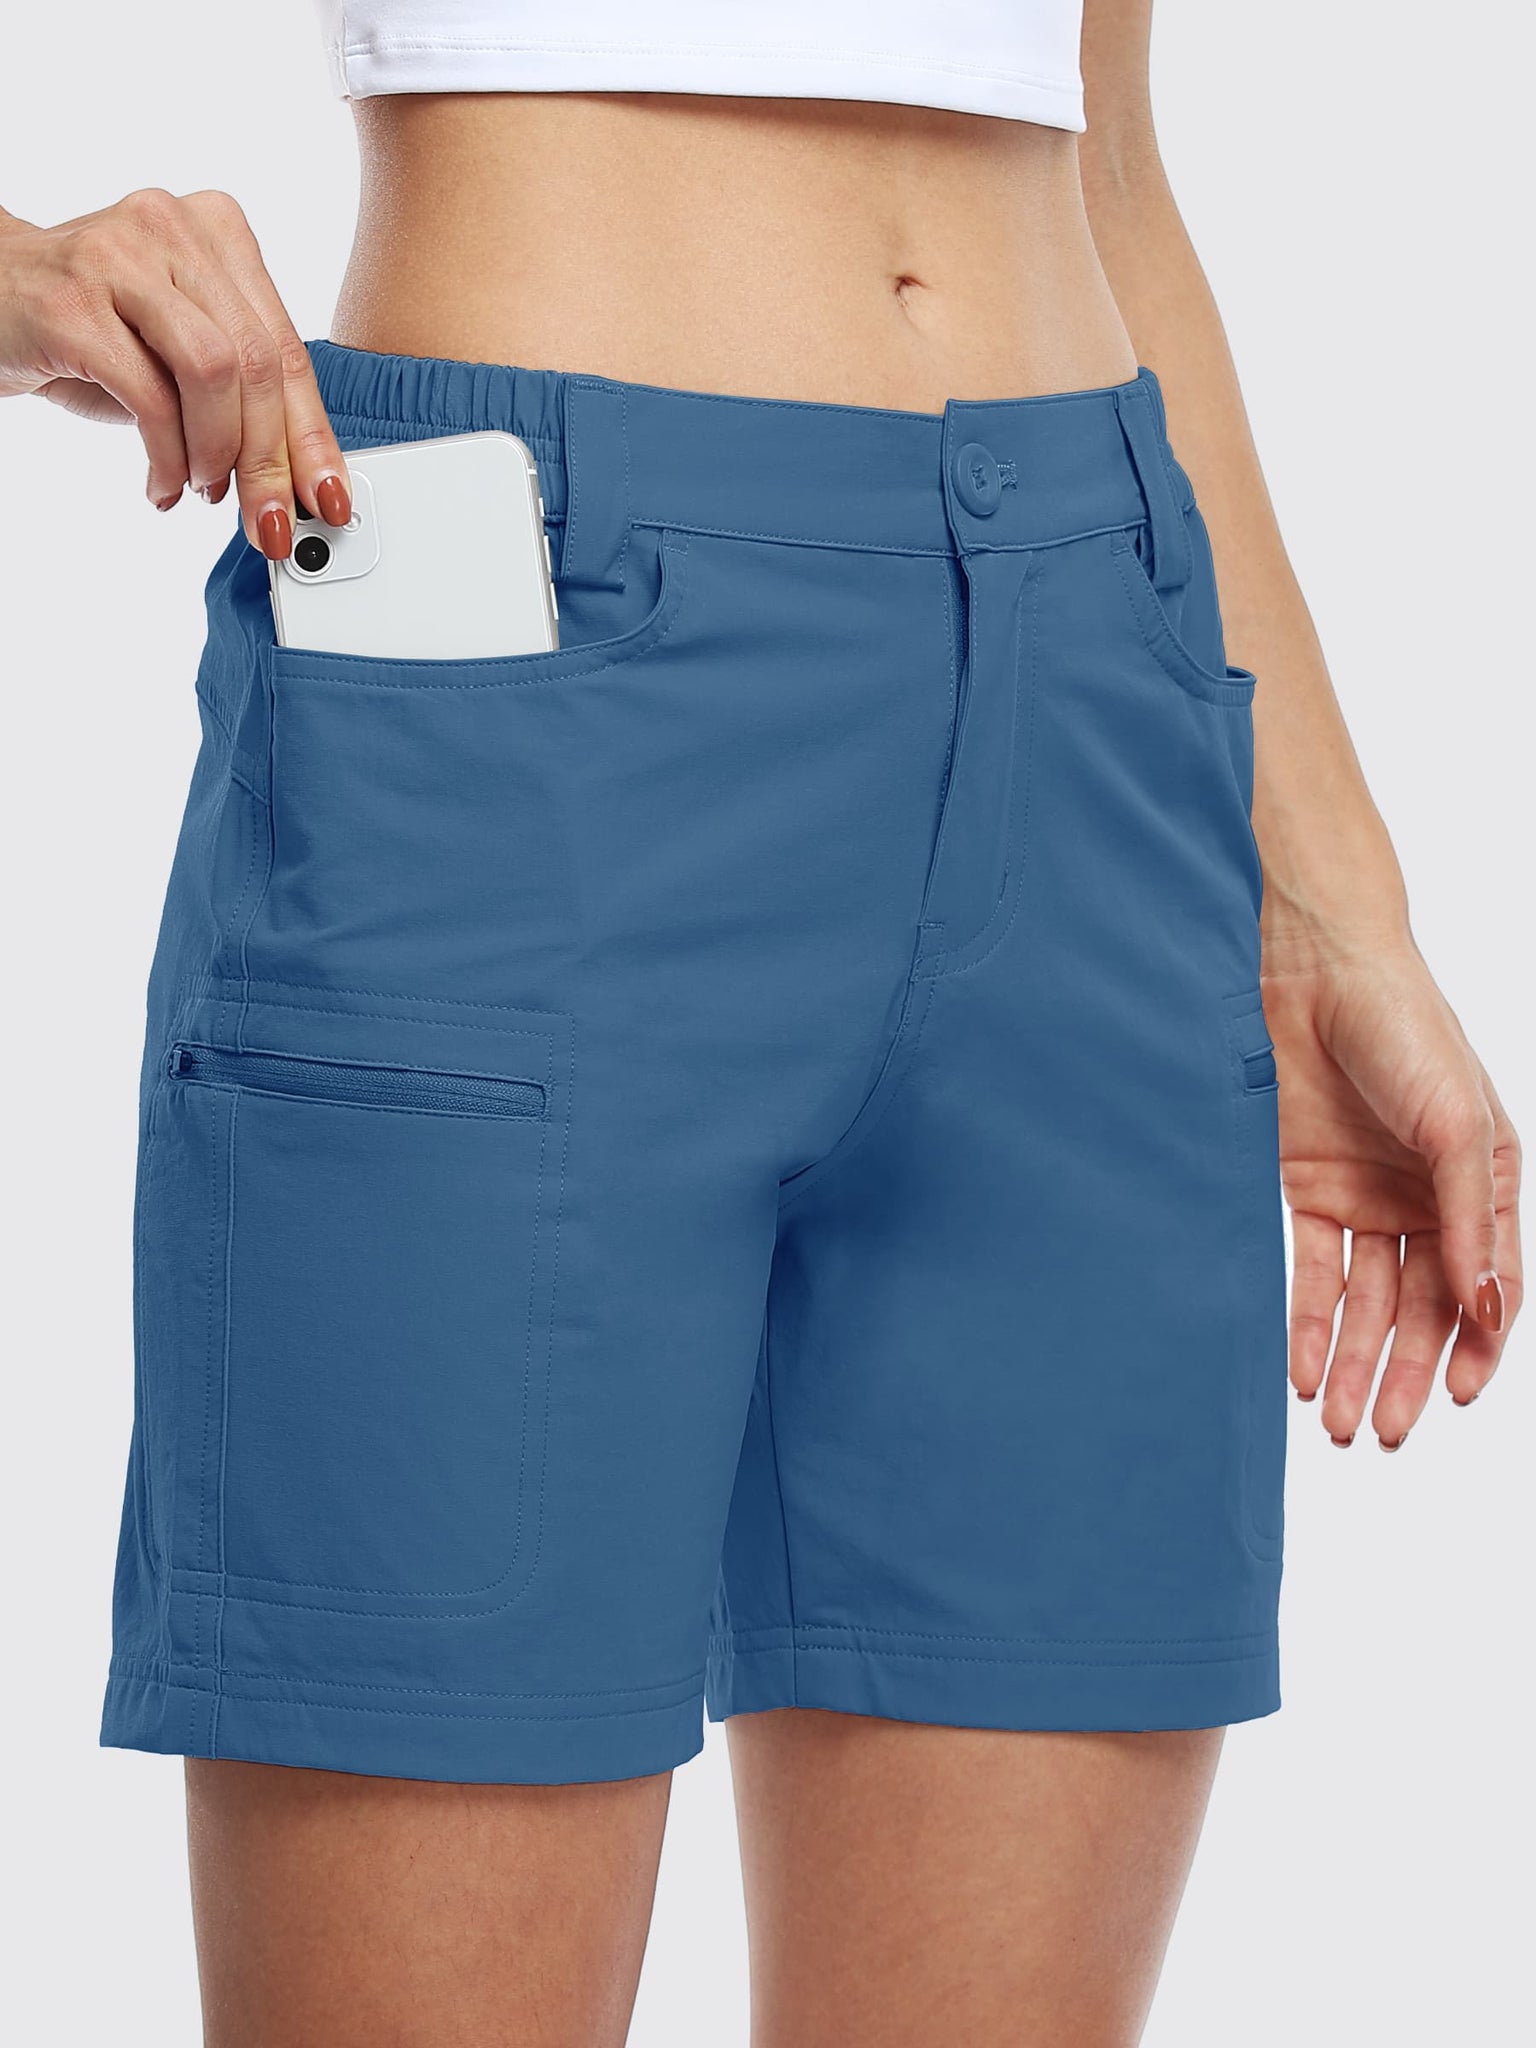 Willit Women's Outdoor Cargo Shorts 6 Inseam_Blue_model3